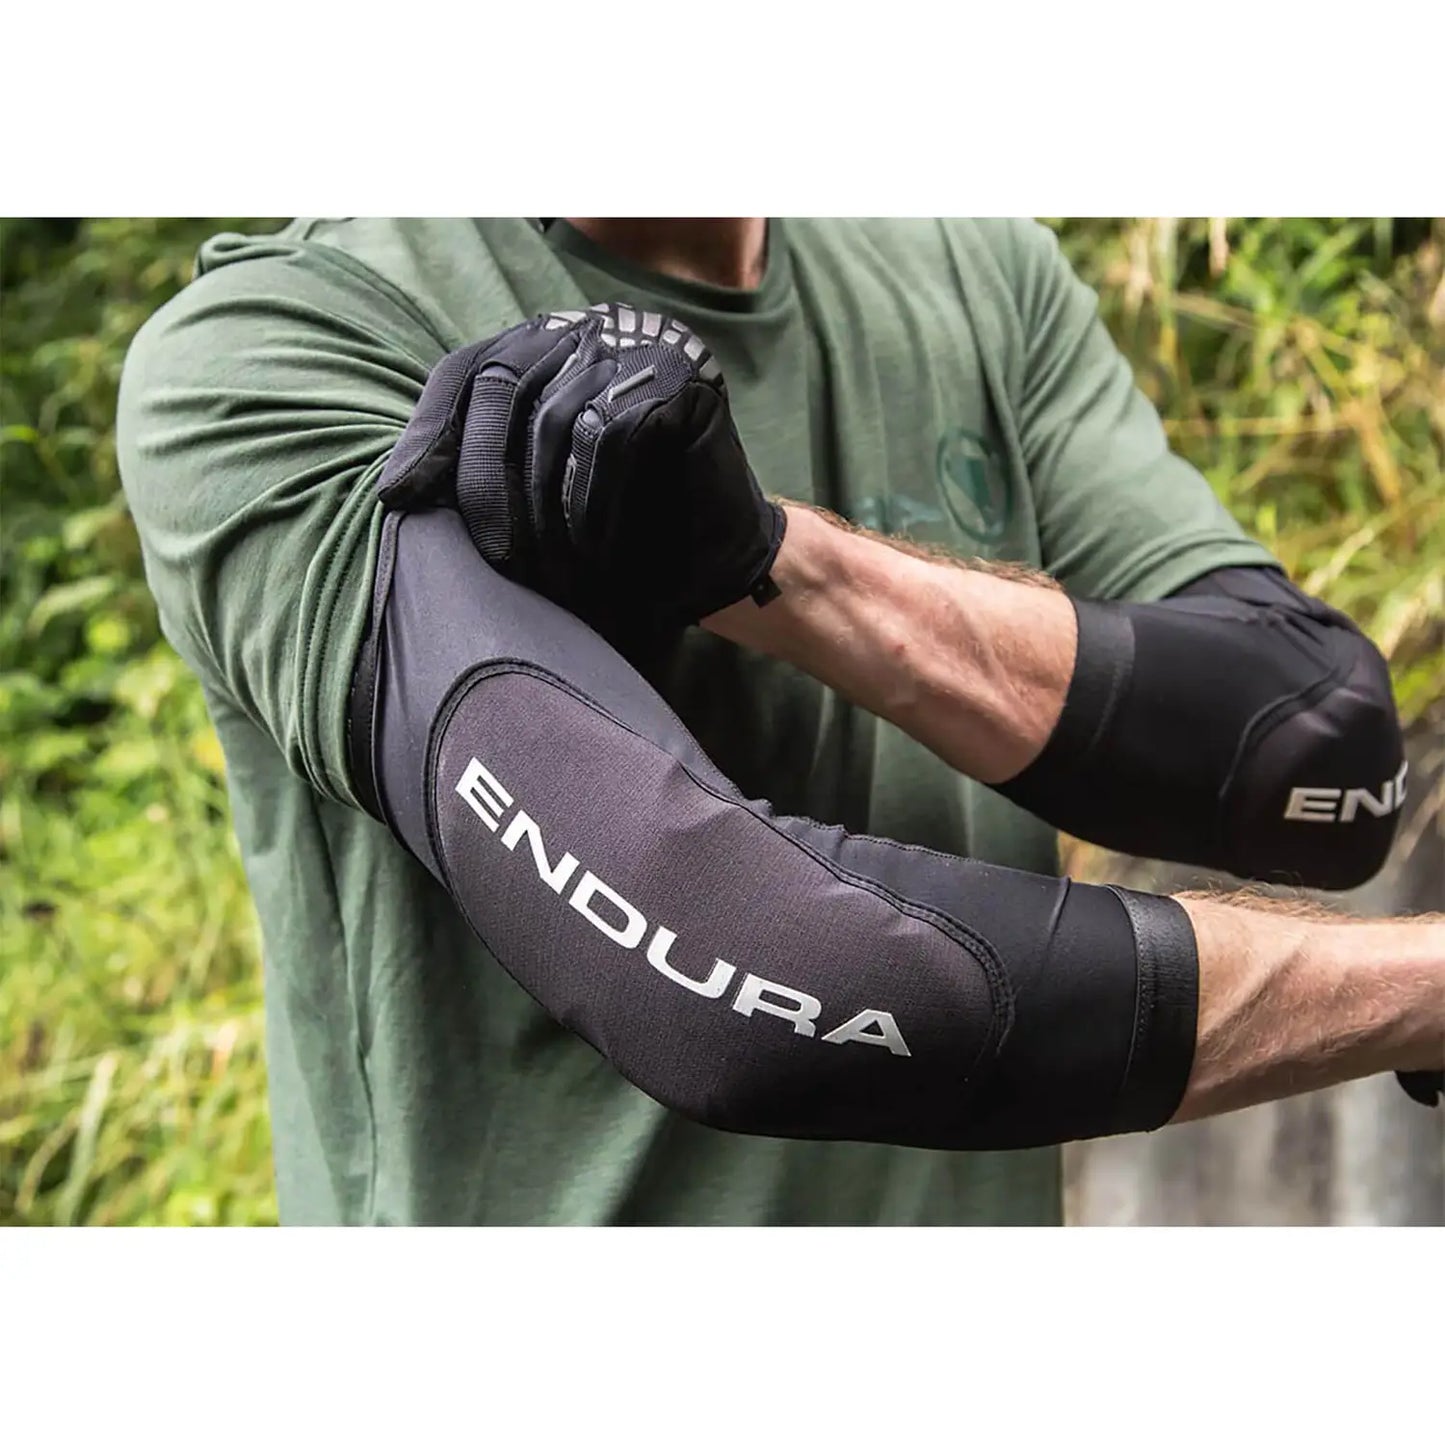 Endura Single Track Protector elbow pads